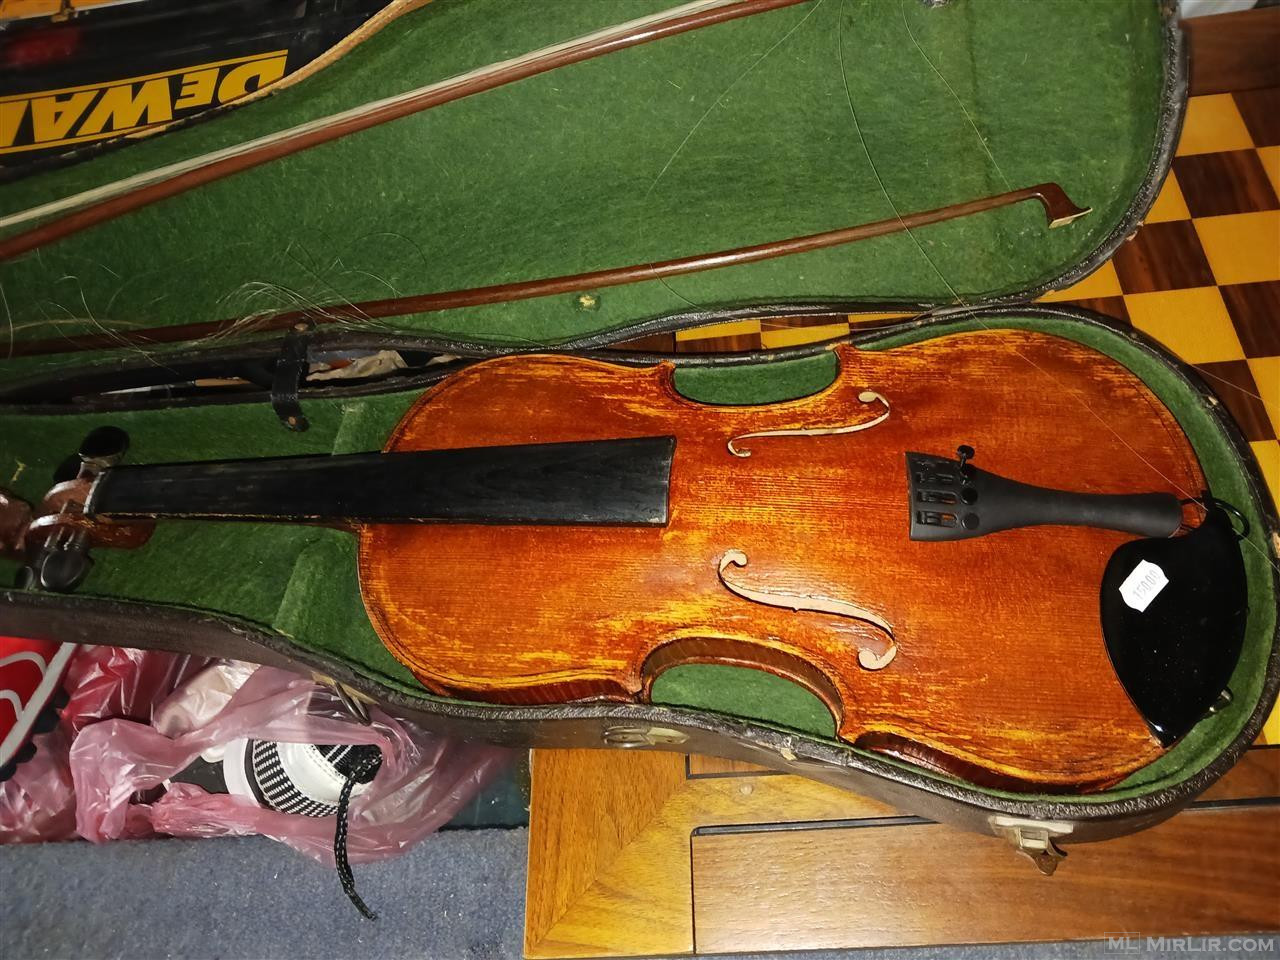 Violin e vjeter uu shit flm merrjepppp